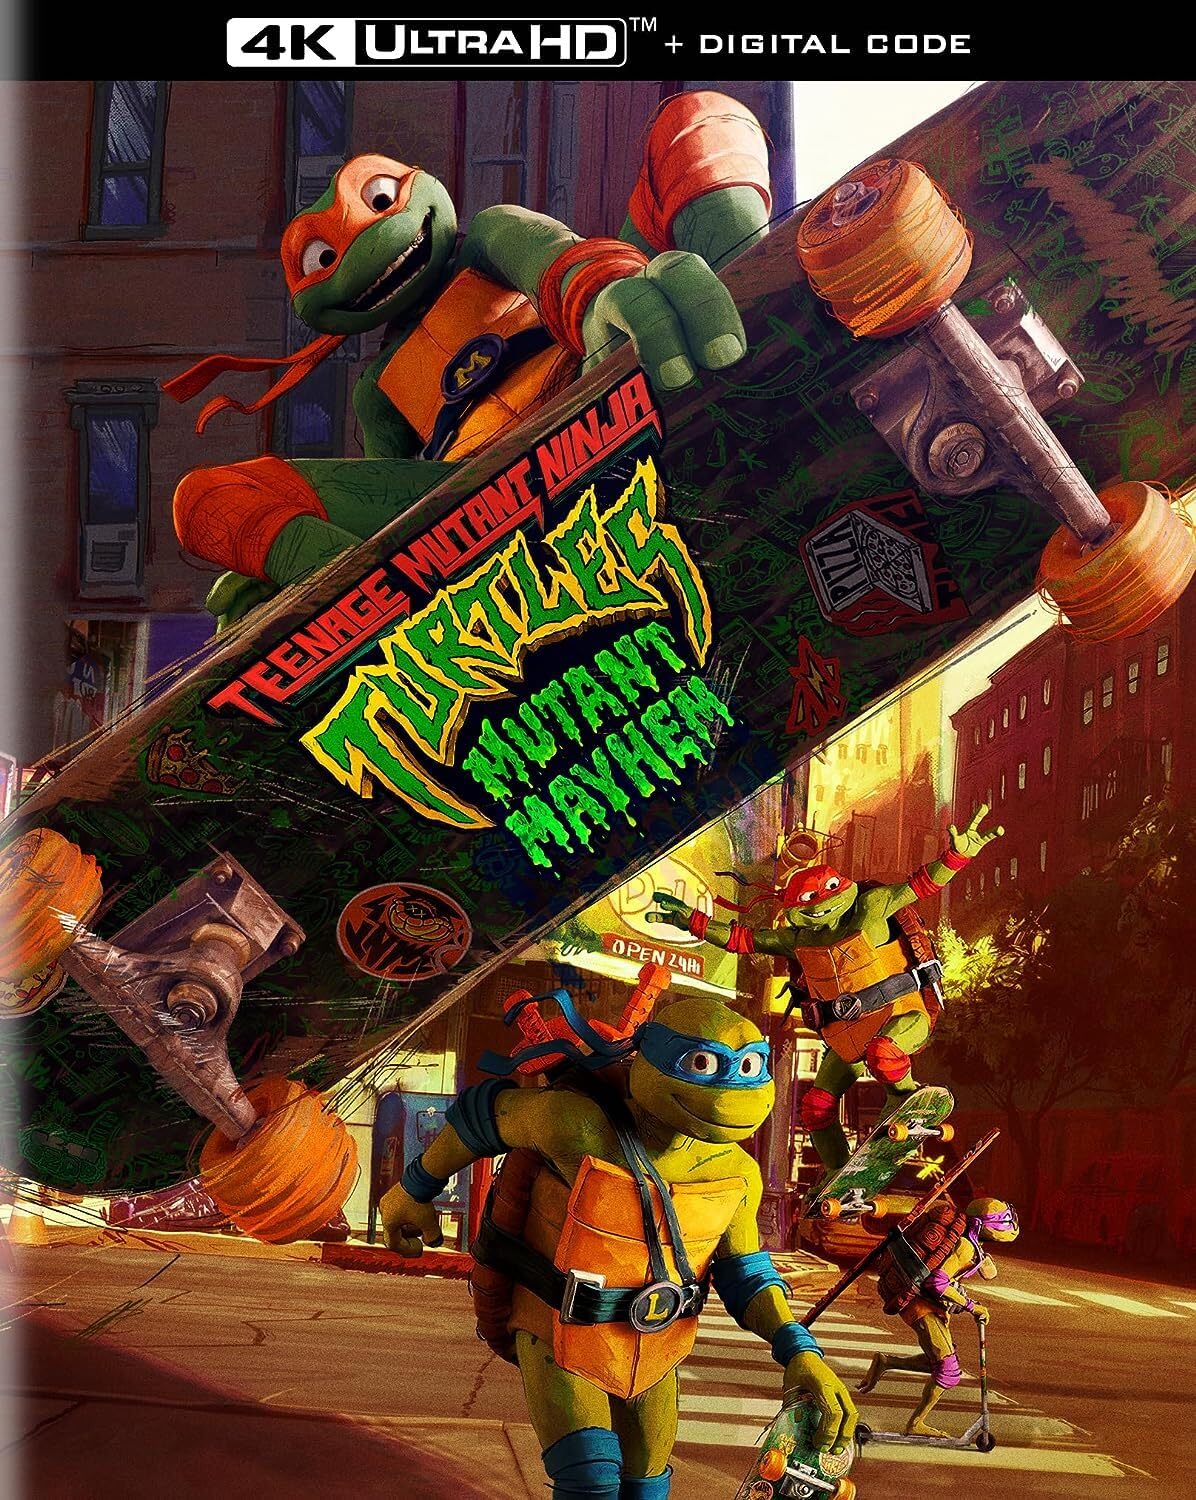 https://www.dvdsreleasedates.com/covers/teenage-mutant-ninja-turtles-mutant-mayhem-4k-uhd-cover-96.jpg